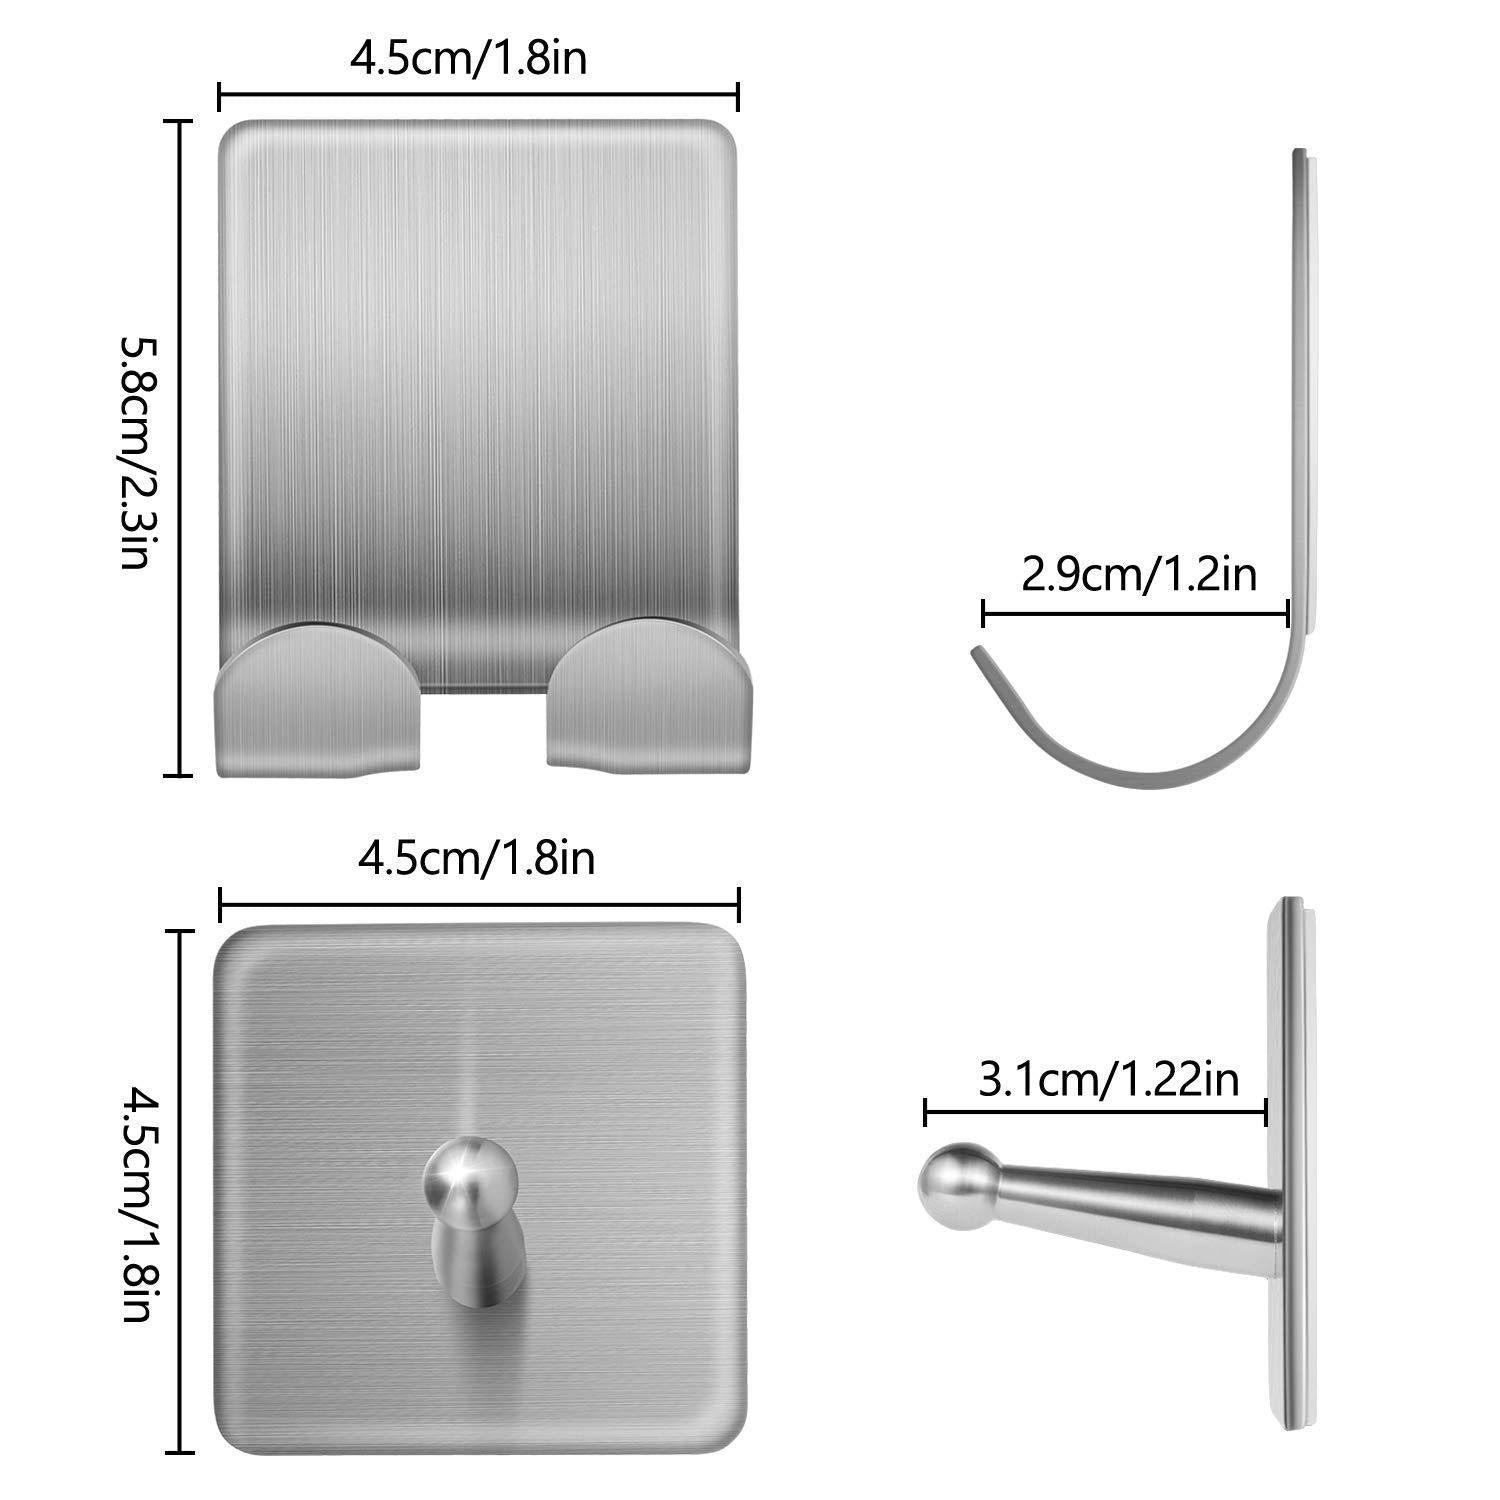 Adhesive Hooks,Stainless Steel Wall Hooks Hanger, 4 Key Hooks and 2 Plug Holder Hook|Double Hooks for Hanging Kitchen Bathroom Office